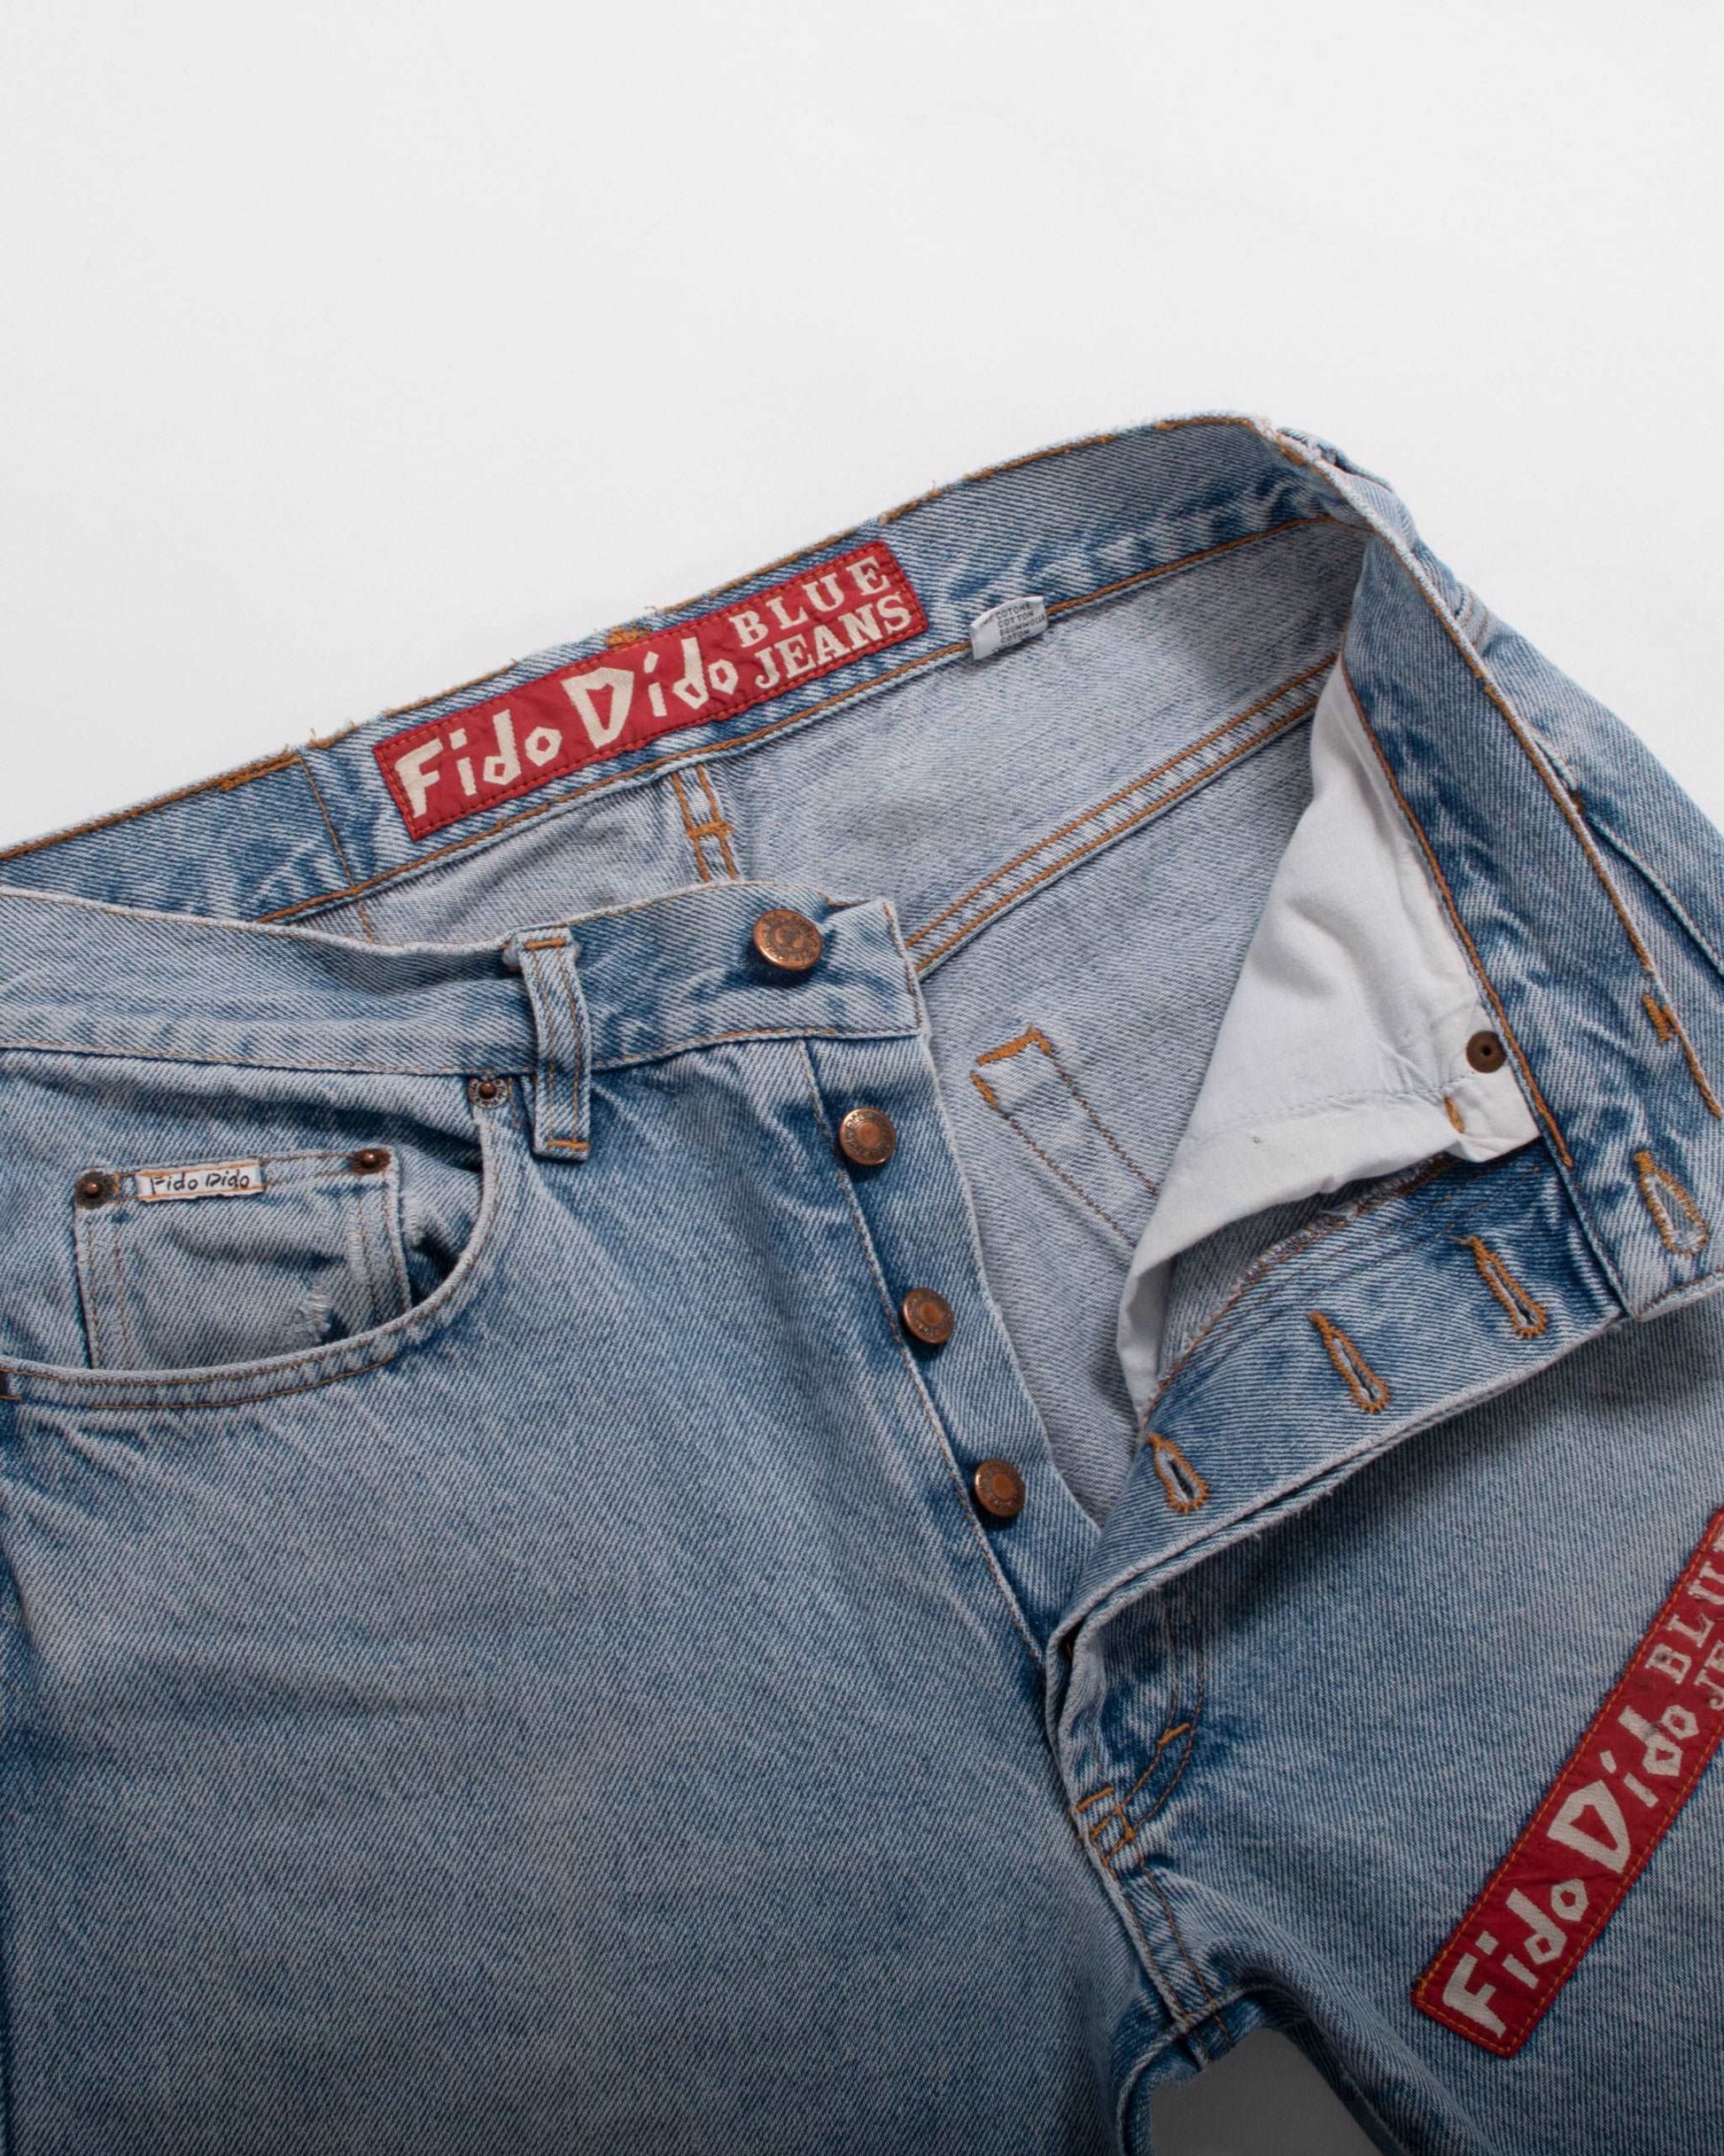 Vintage Fido Dido denim blue jeans